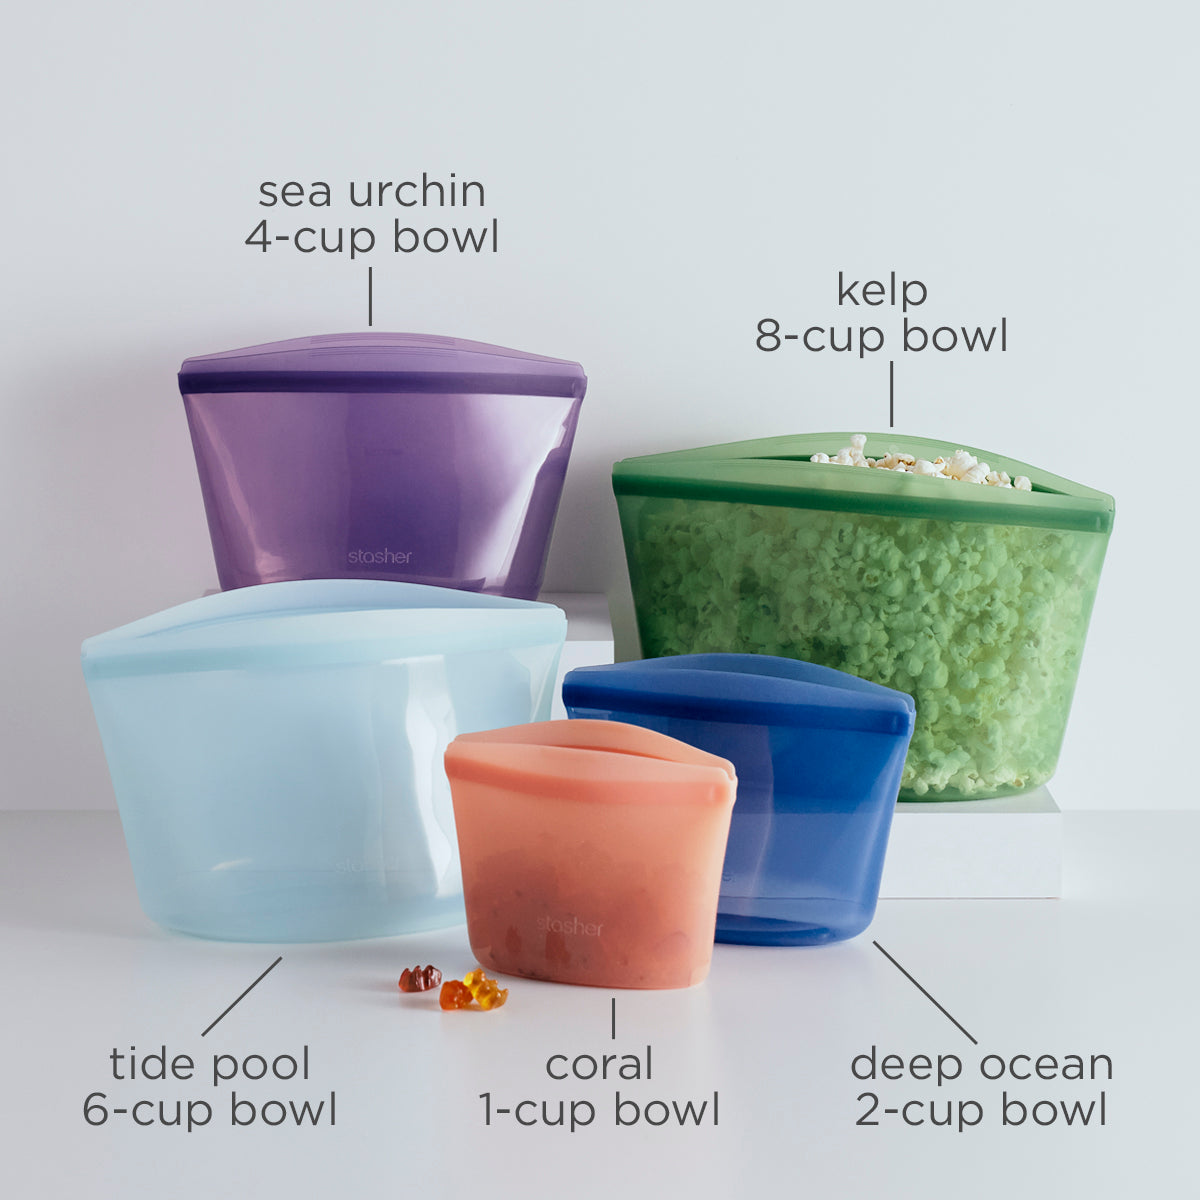 Tupperware Plastic Storage Star Bowl - 500 ml, 4 Pieces, Multicolor